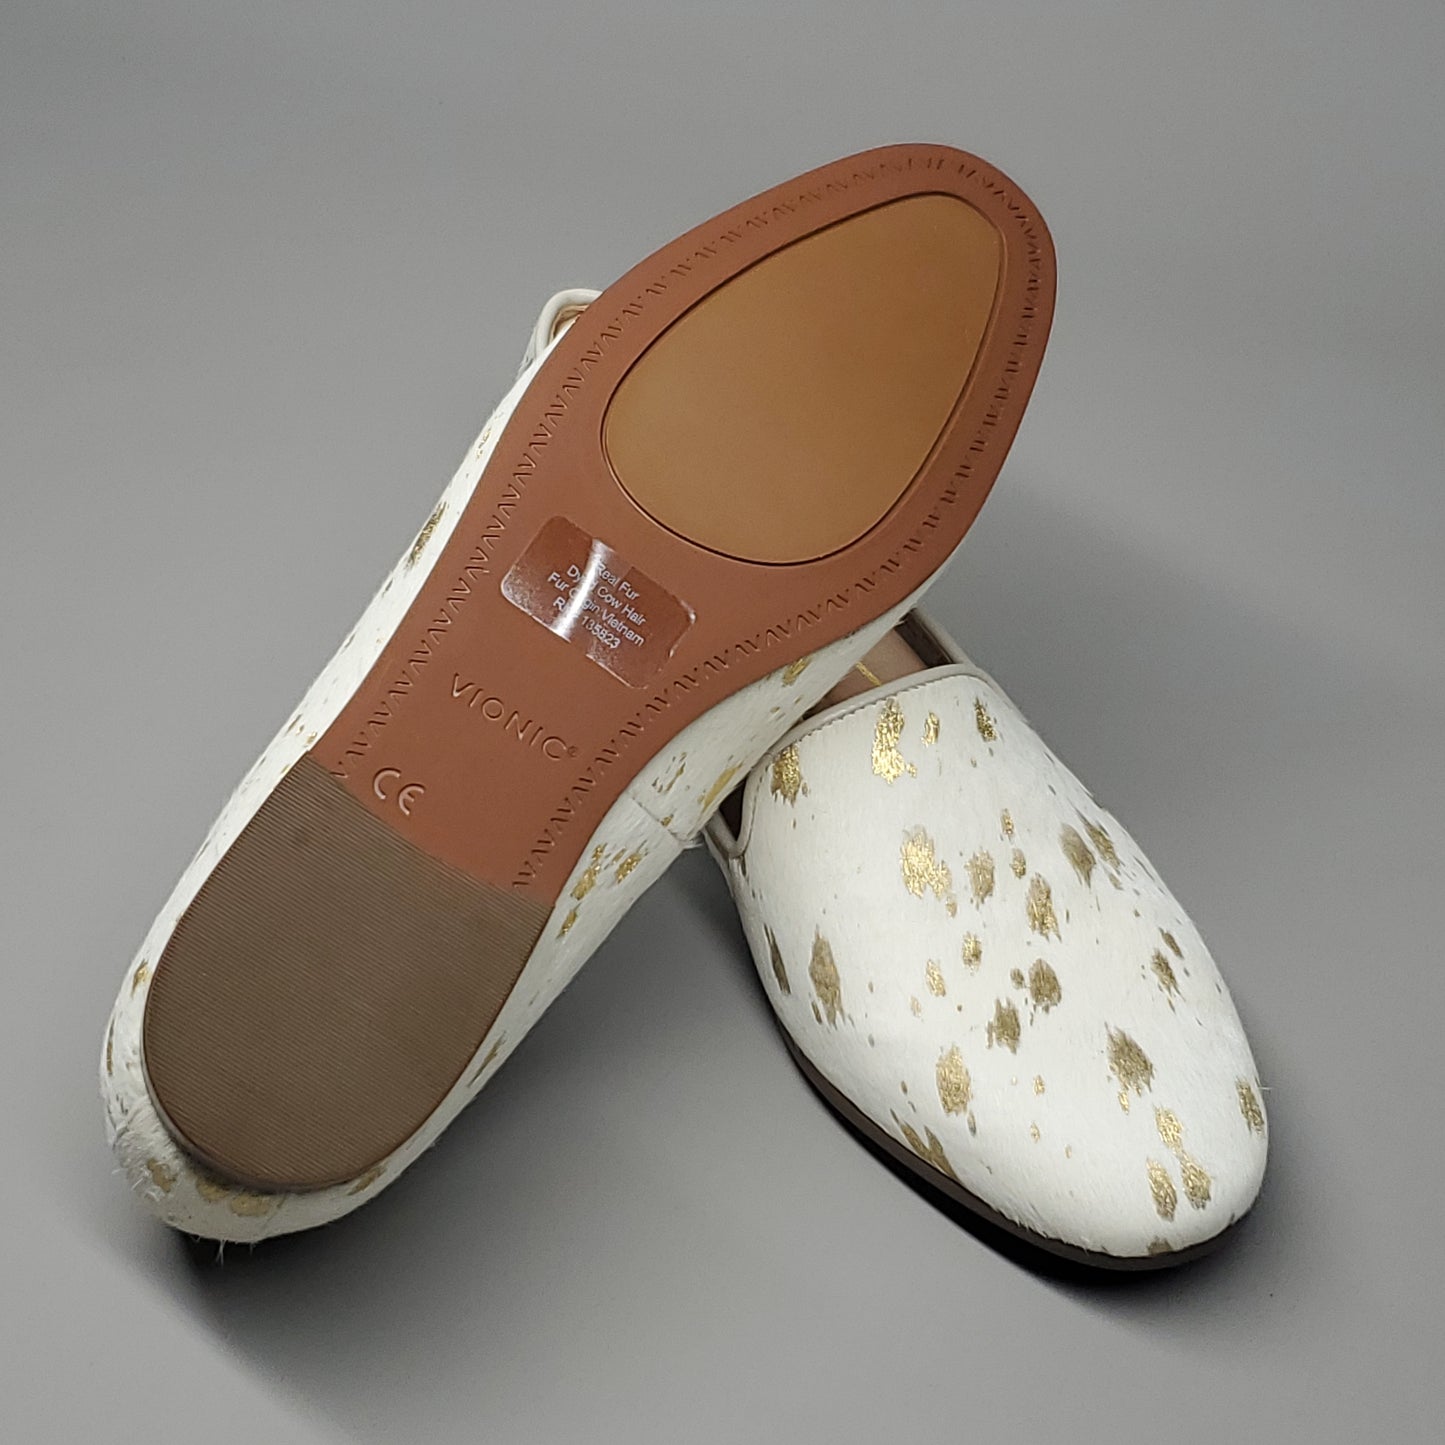 VIONIC Willa Slip On Loafer Flat Shoe Women's Sz 6.5 Gold Metallic H7711L3700 (New)